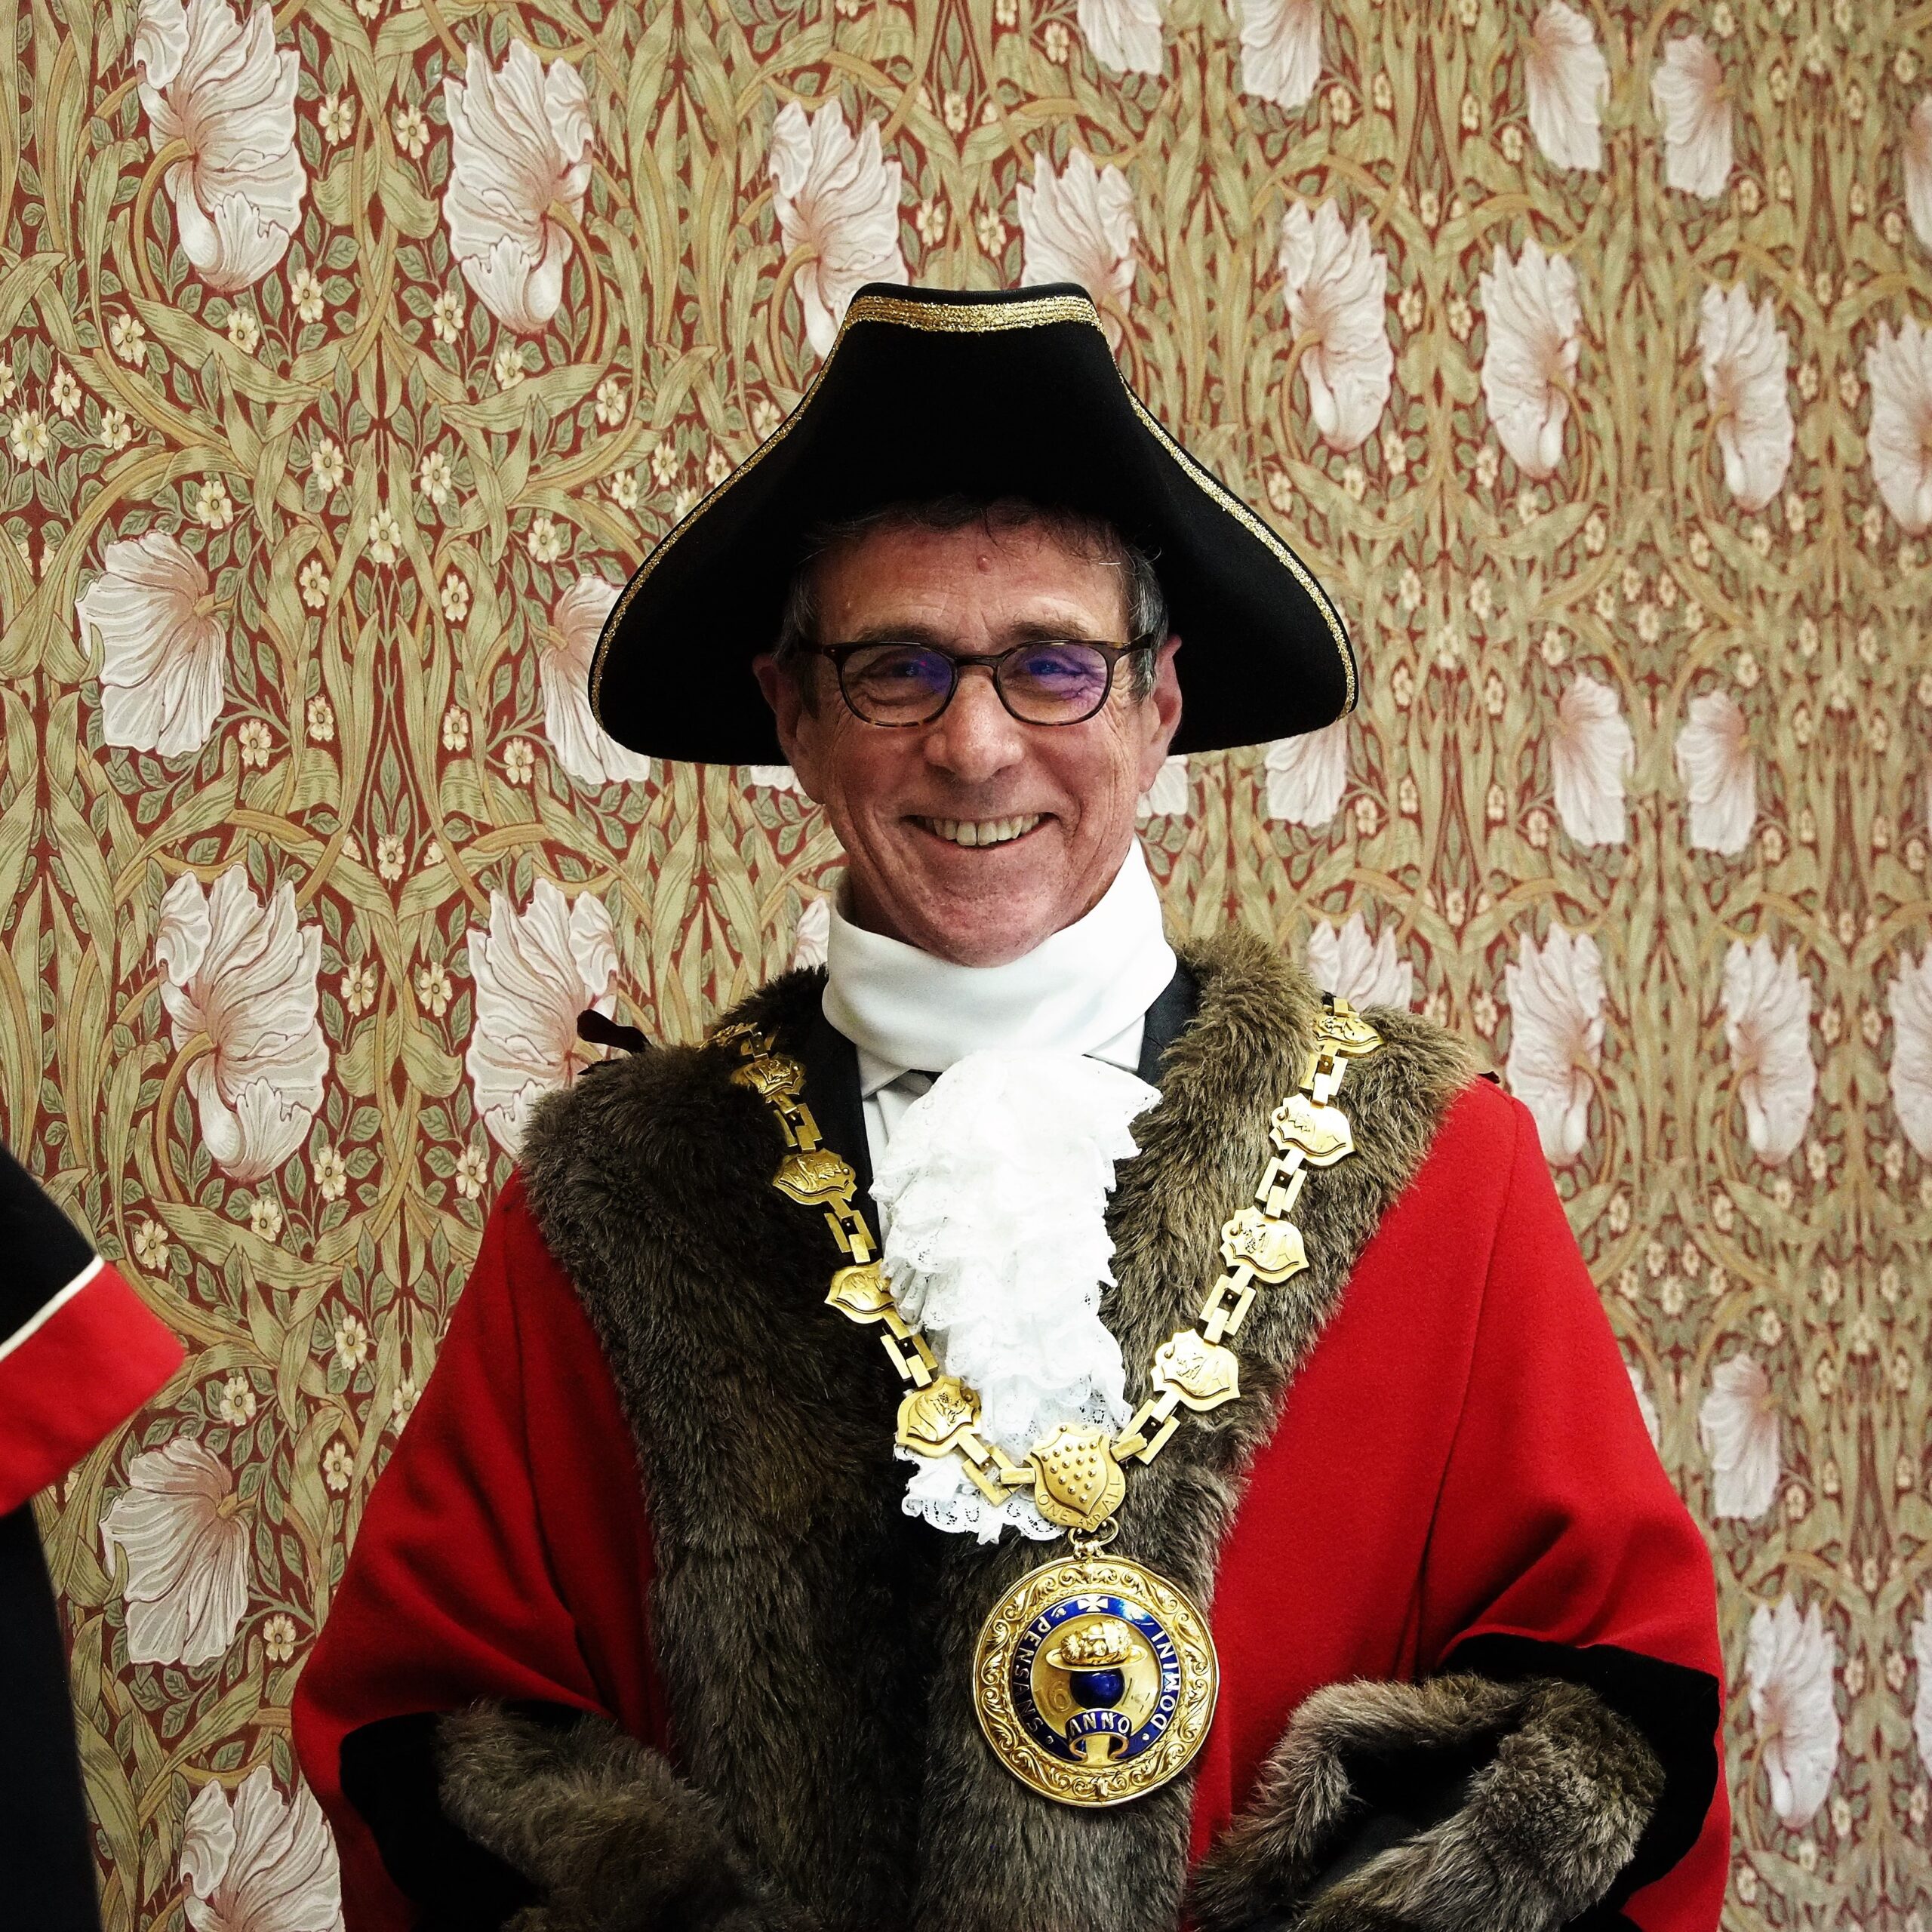 The Mayor of Penzance - Cllr Stephen Reynolds